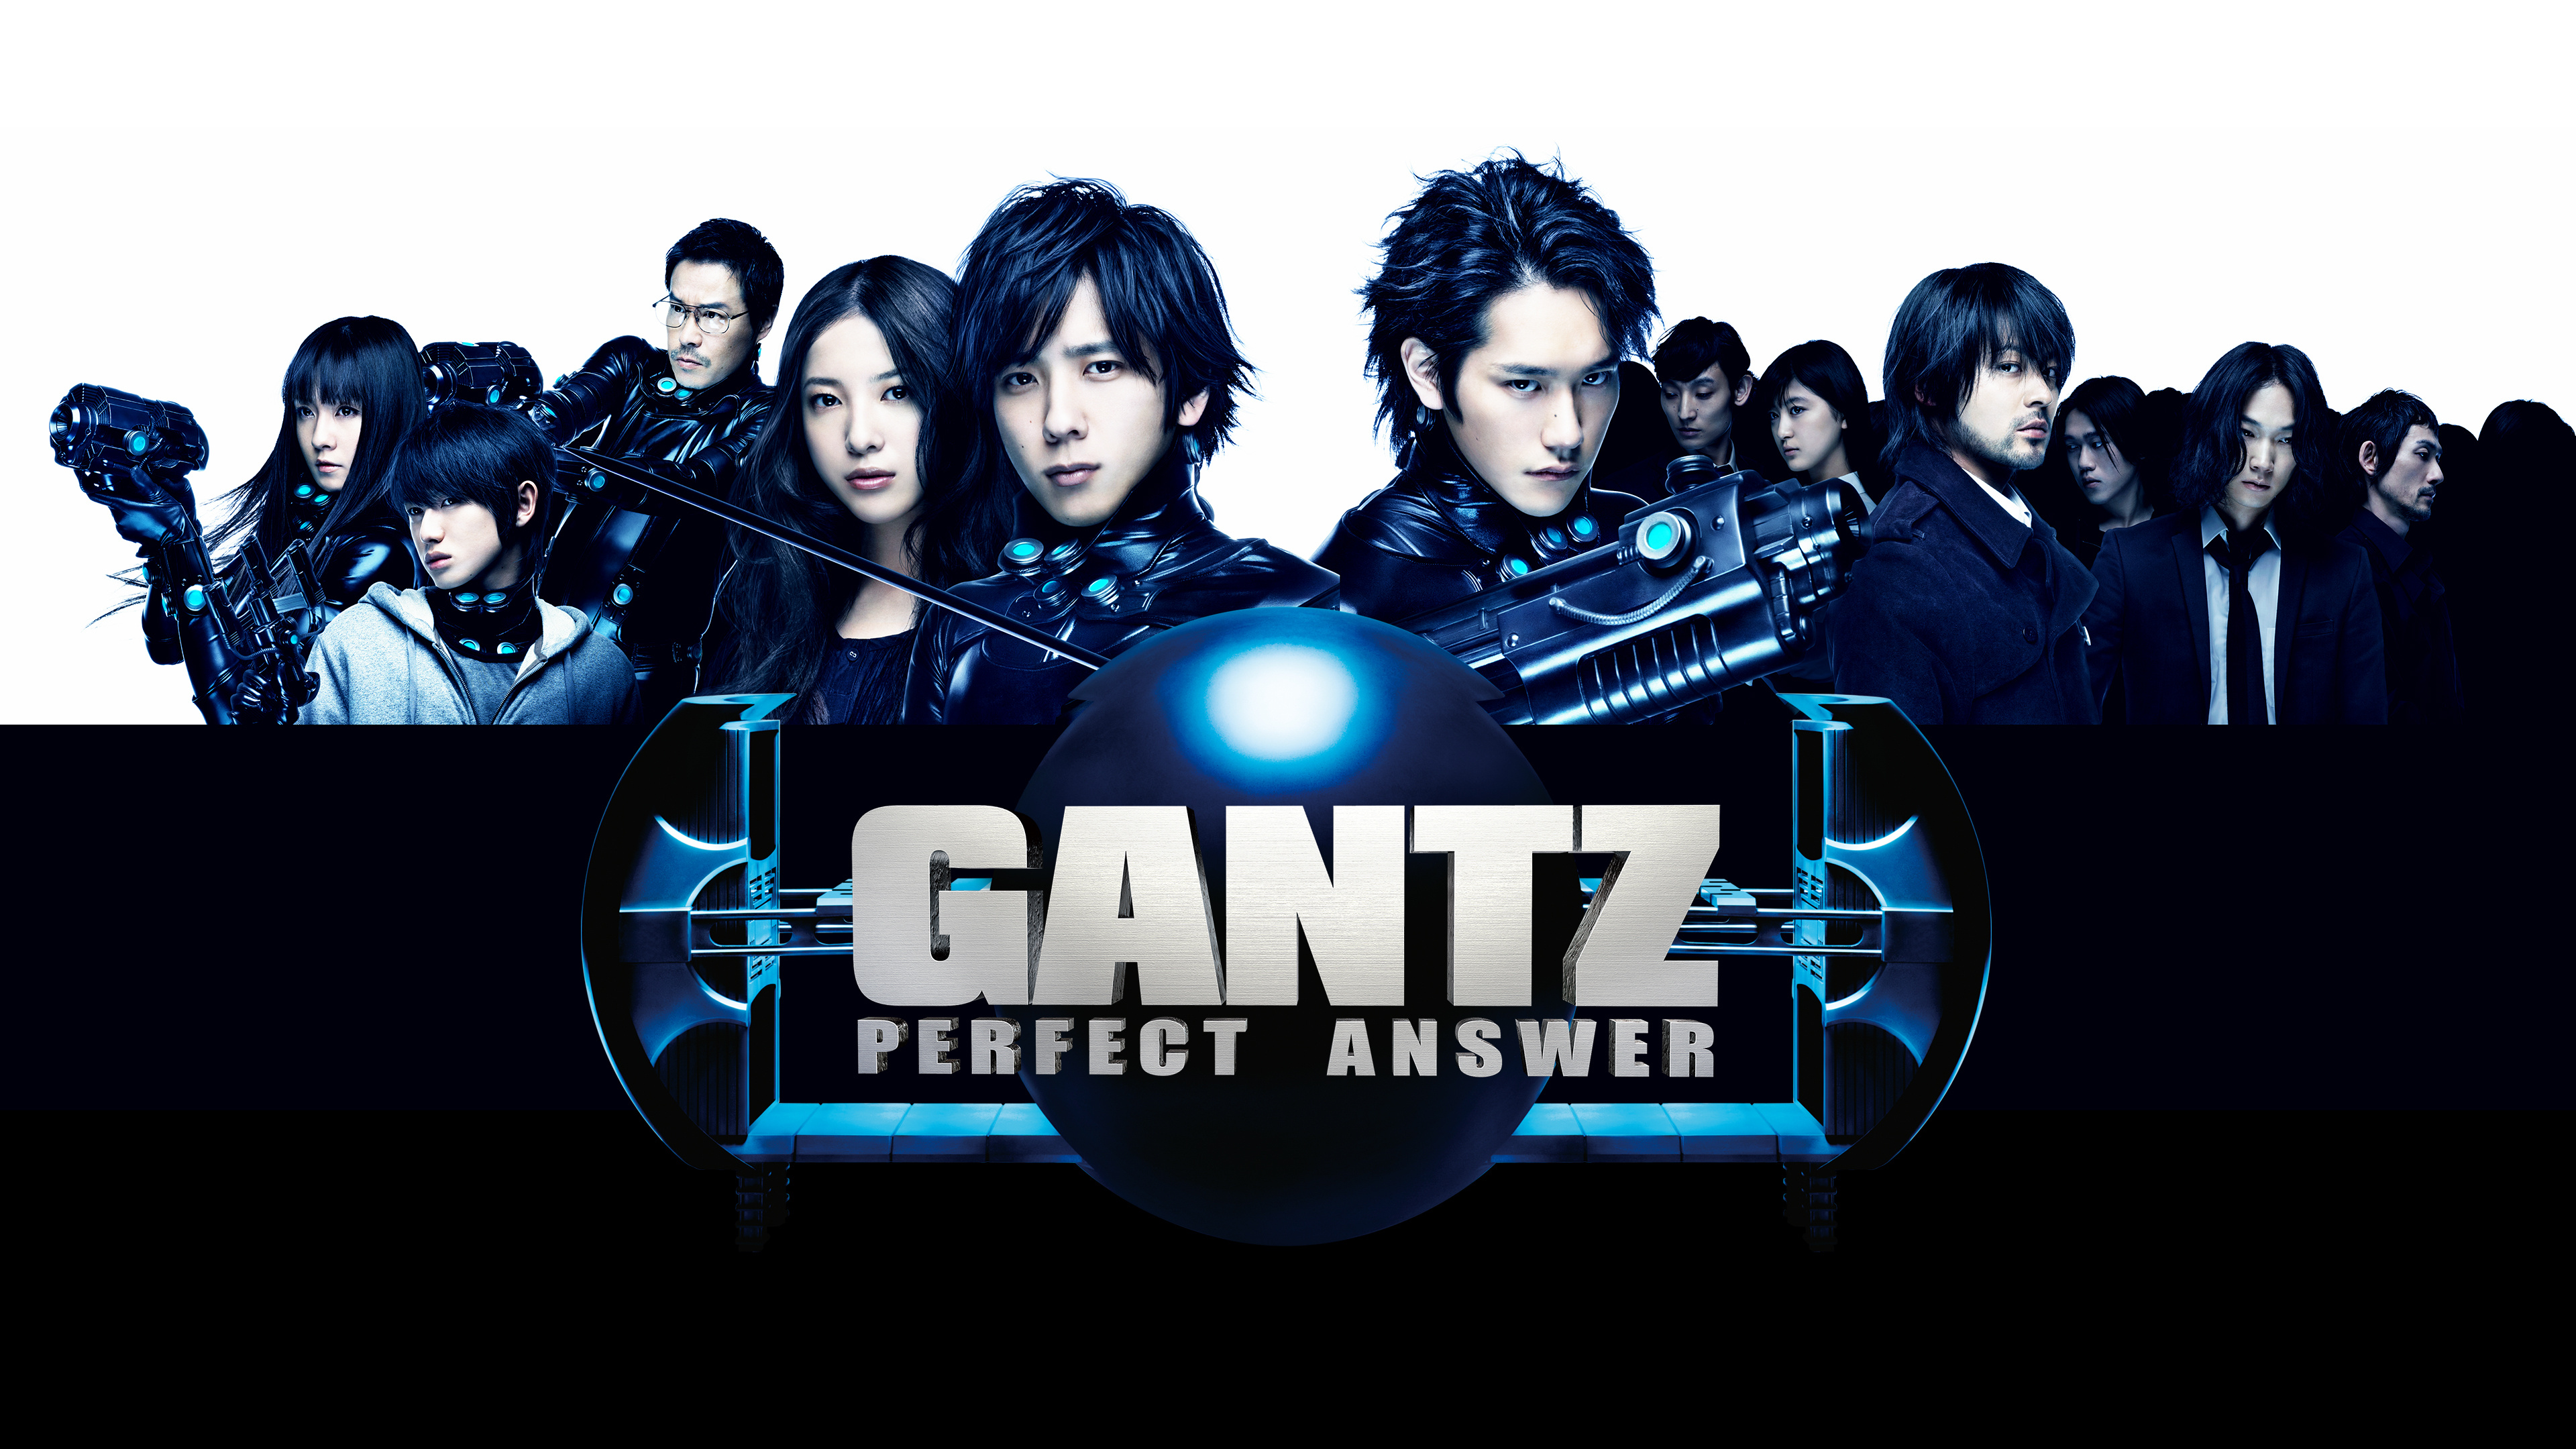 Gantz Anime, Perfect answer1, Gantz perfect answer, Gantz, 3840x2160 4K Desktop